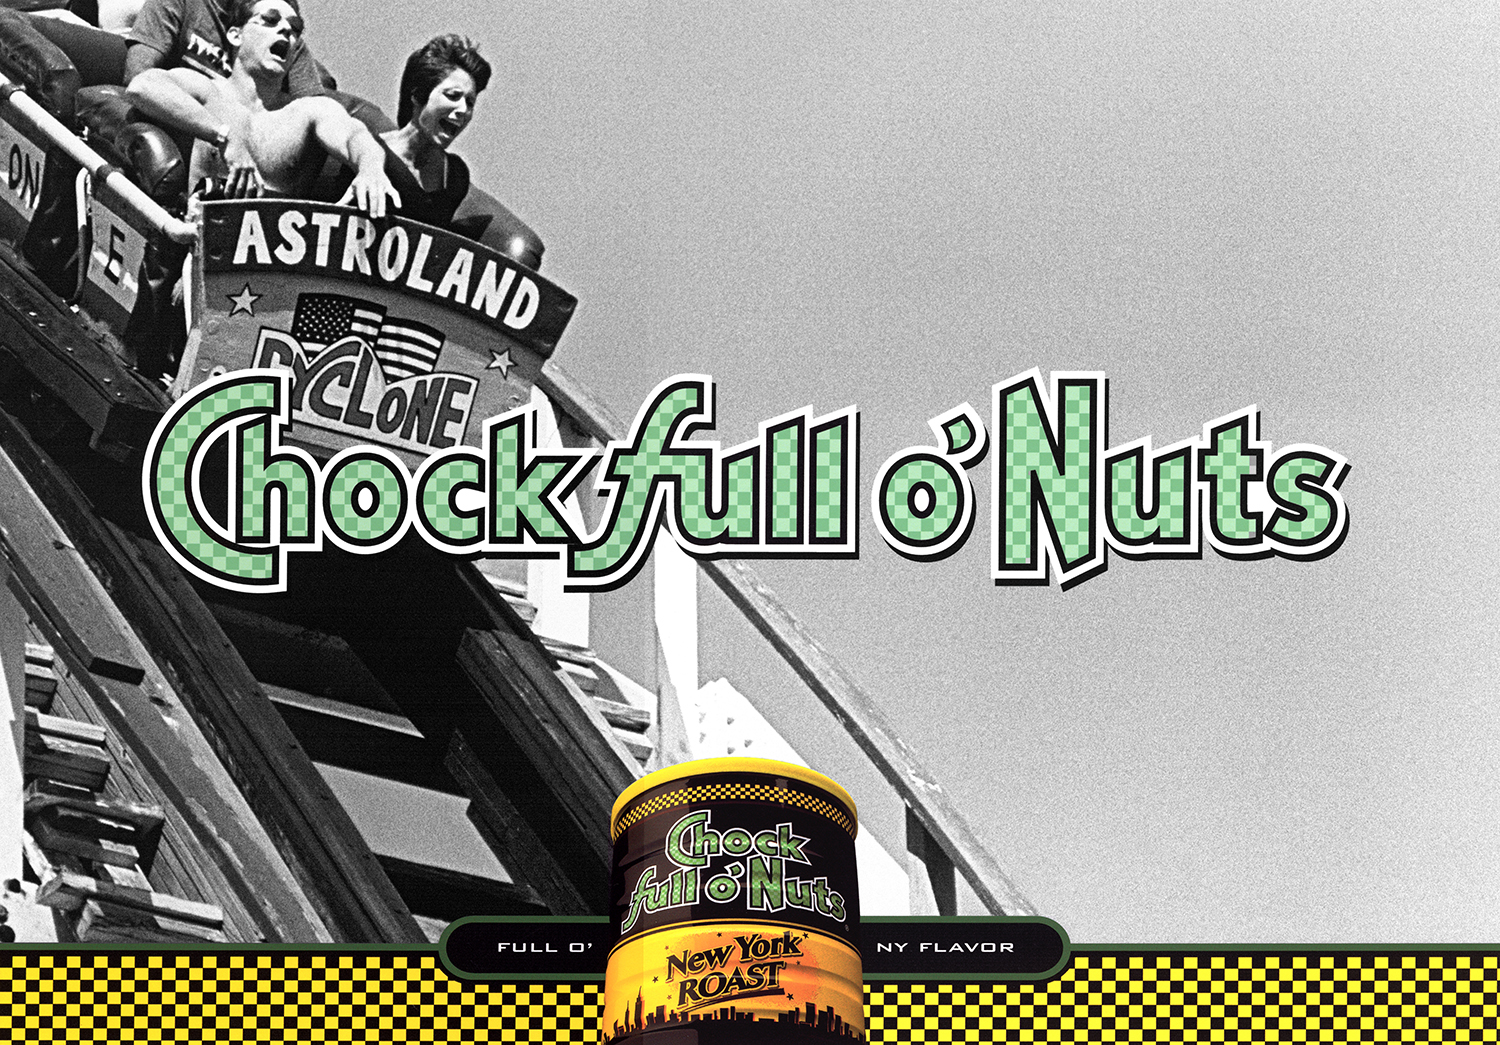   Chock full o'Nuts New York Roast Campaign  BBDO, Chicago 2003 